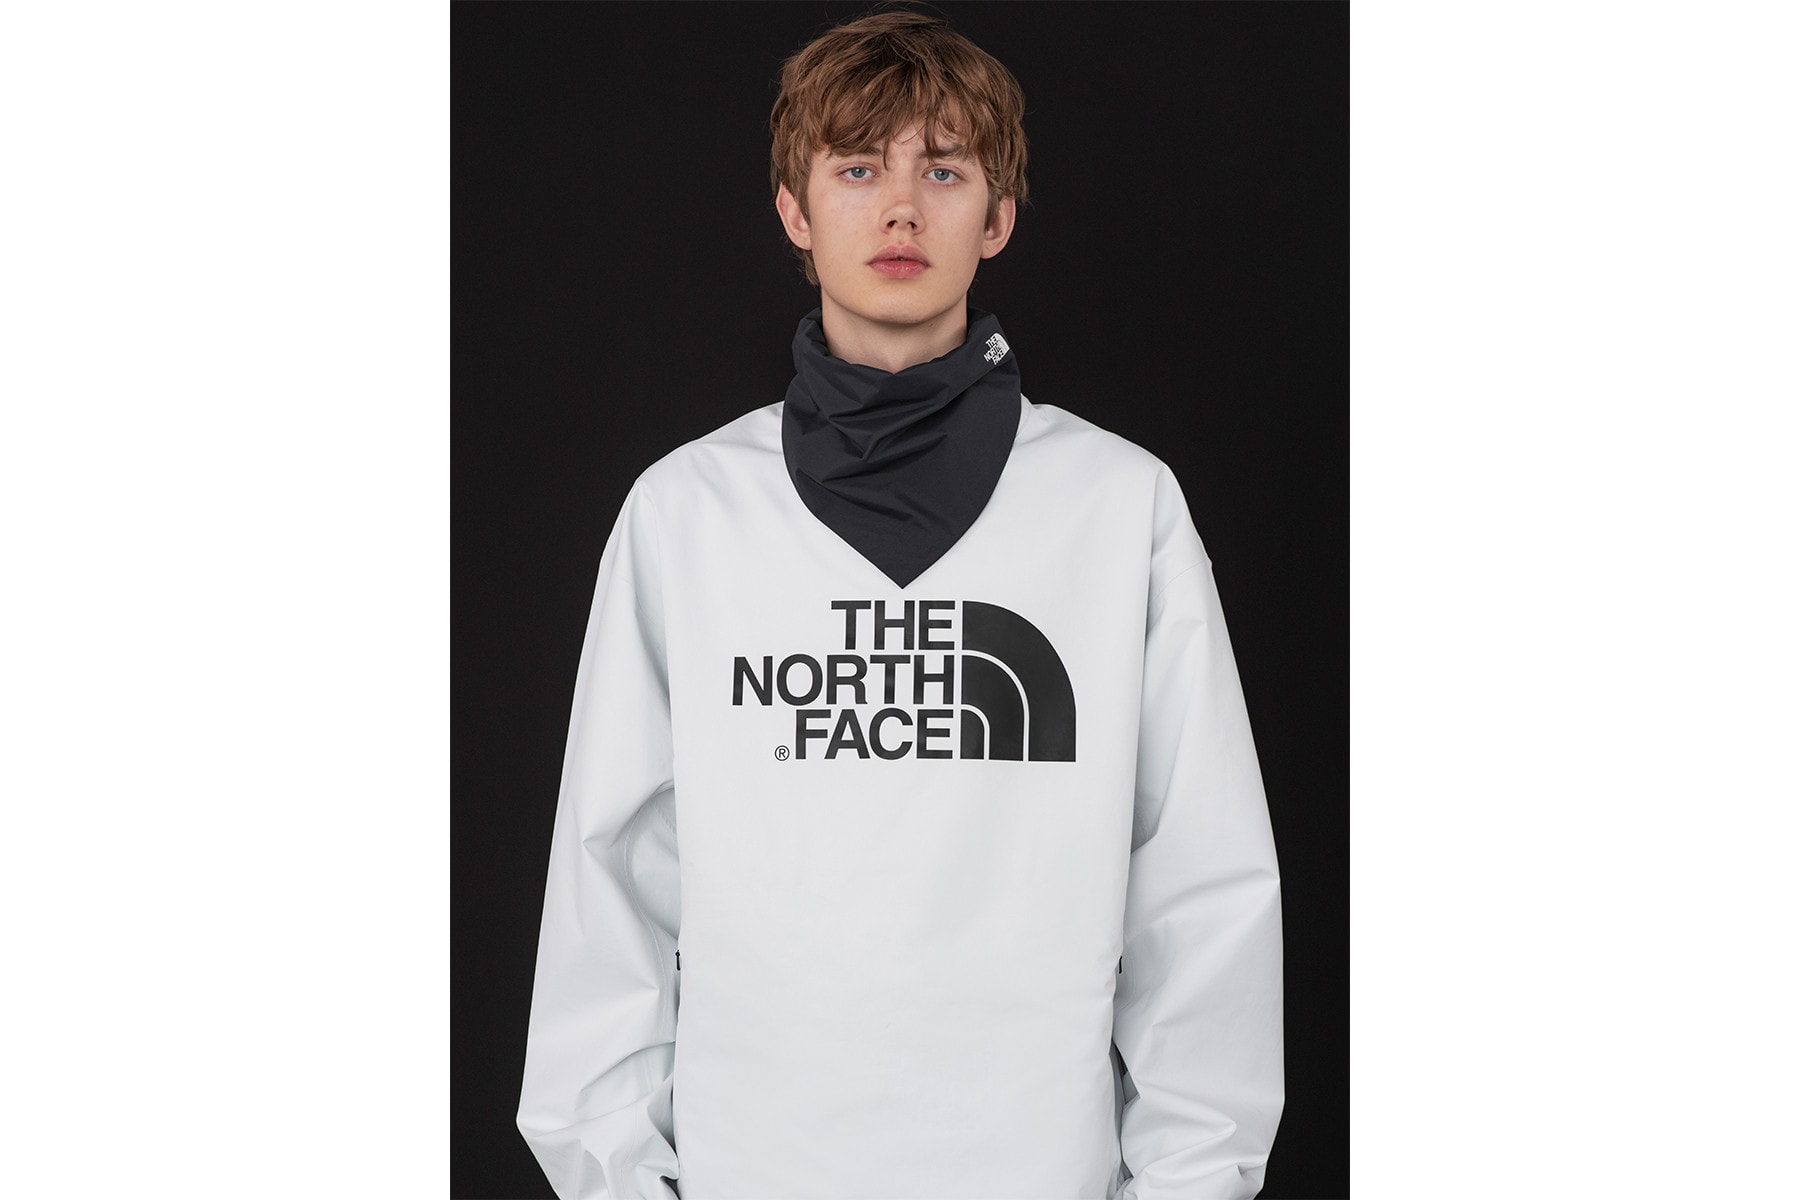 待望之男裝首次現身！The North Face x HYKE Spring/Summer 2019 季度 Lookbook 發表